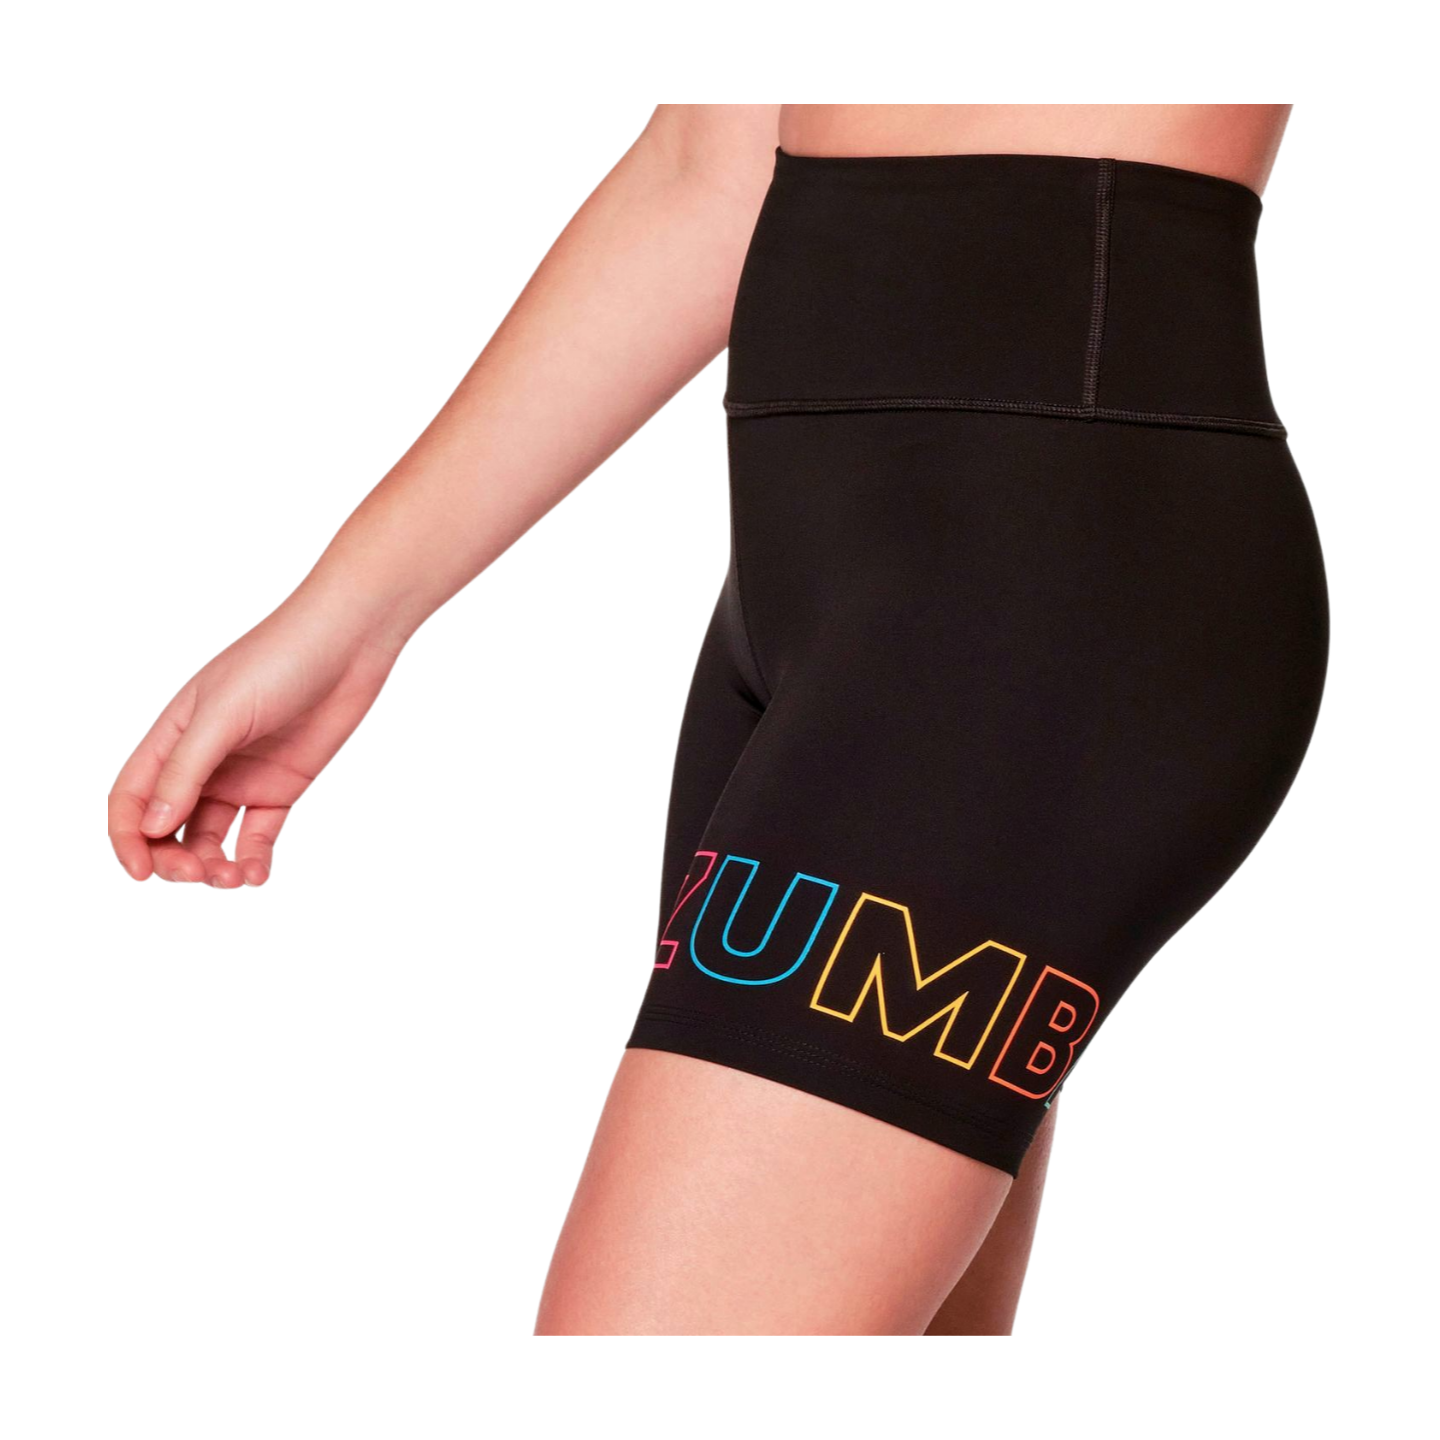 Zumba Vibrant Biker Shorts (Special Order)